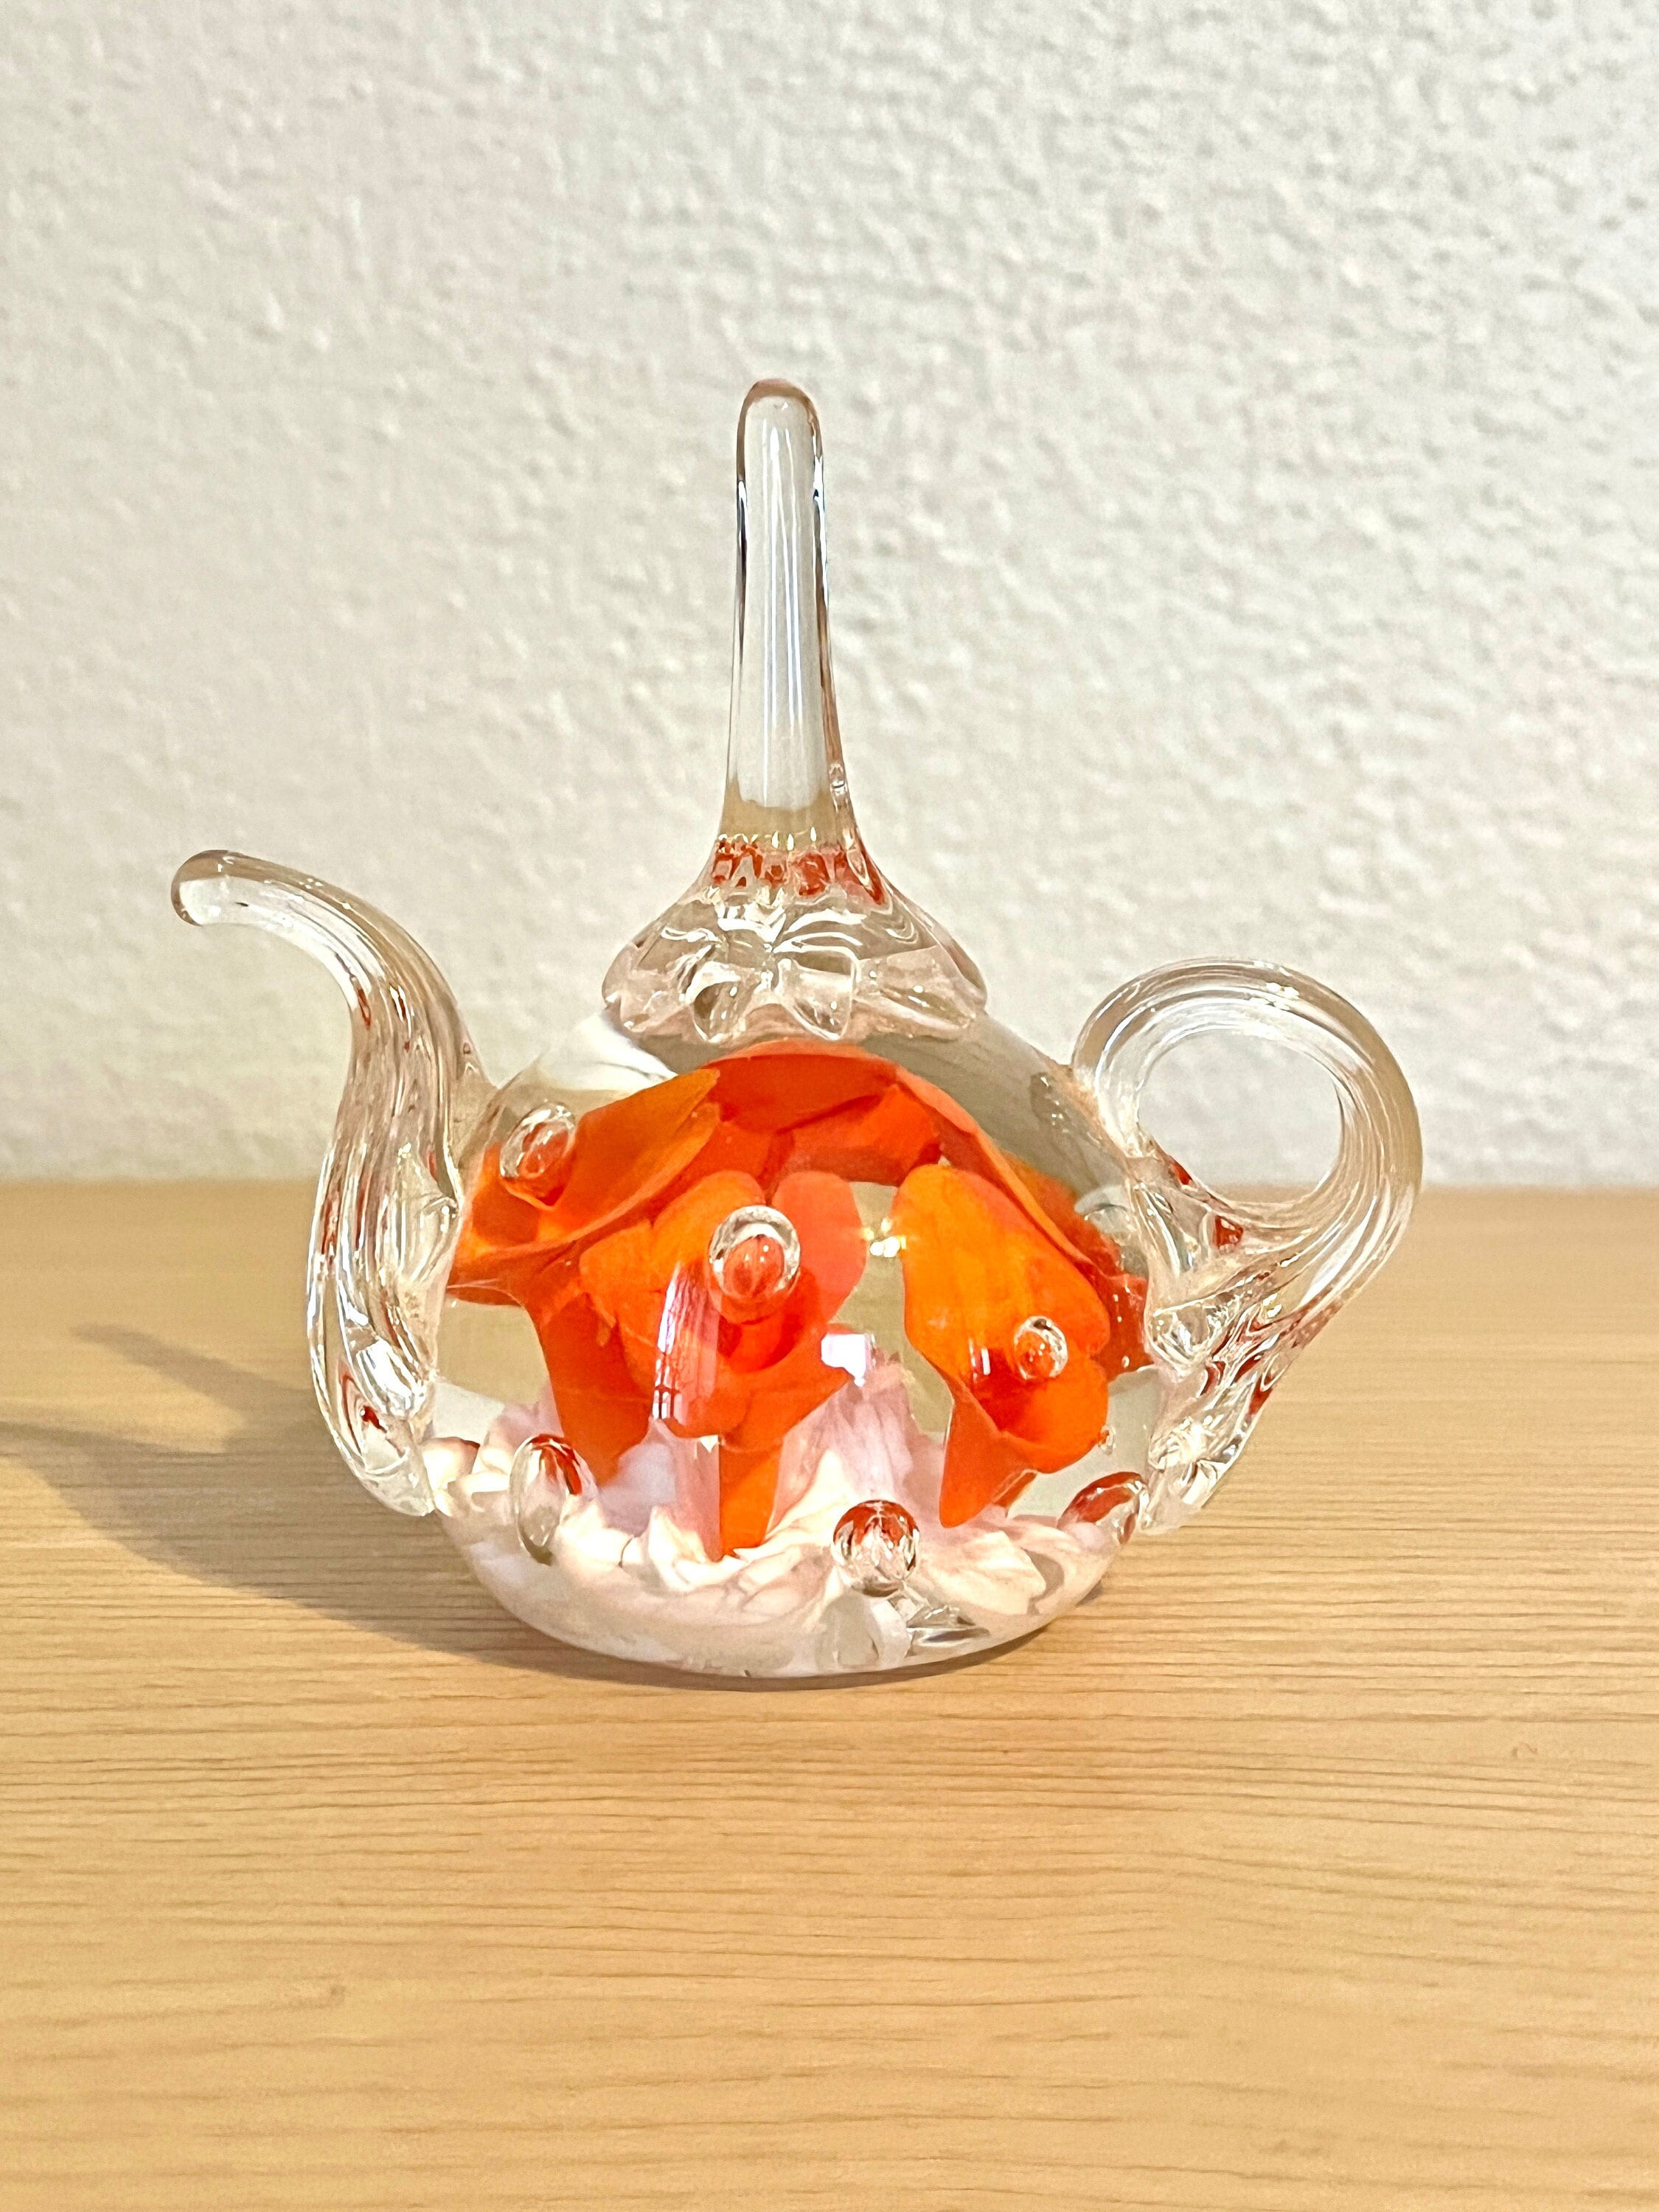 Blown glass teapot Beaux Arts - 4 cups